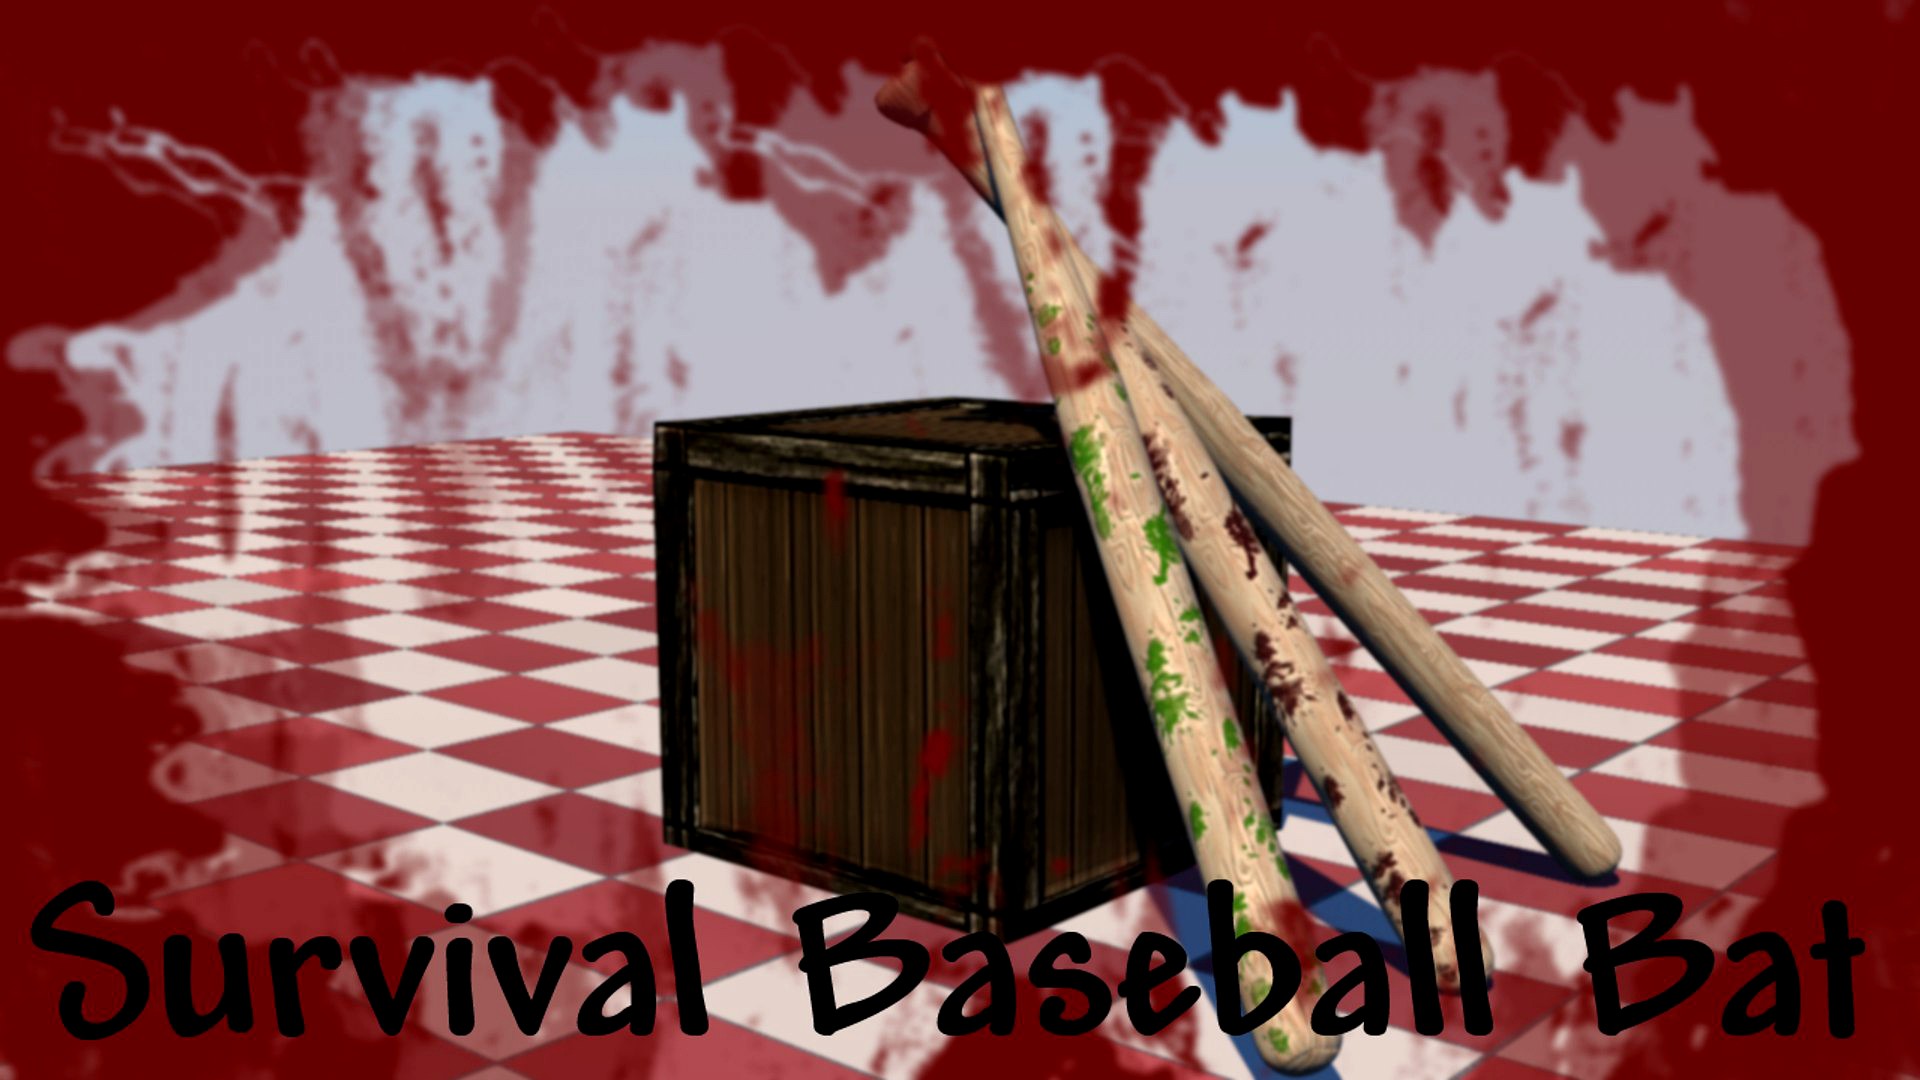 Survival Baseball Bat